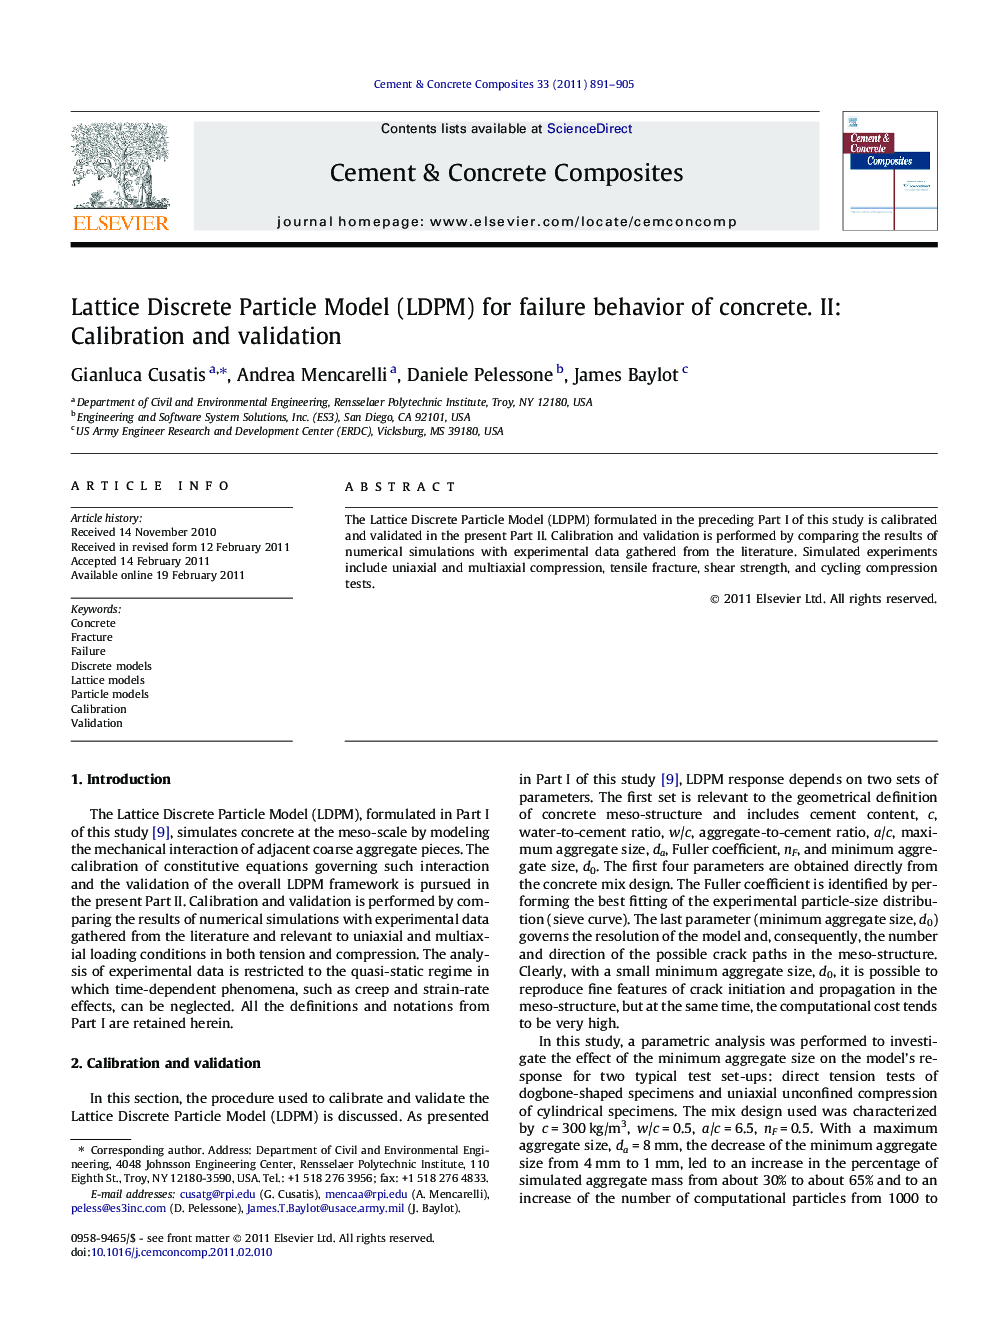 Lattice Discrete Particle Model (LDPM) for failure behavior of concrete. II: Calibration and validation